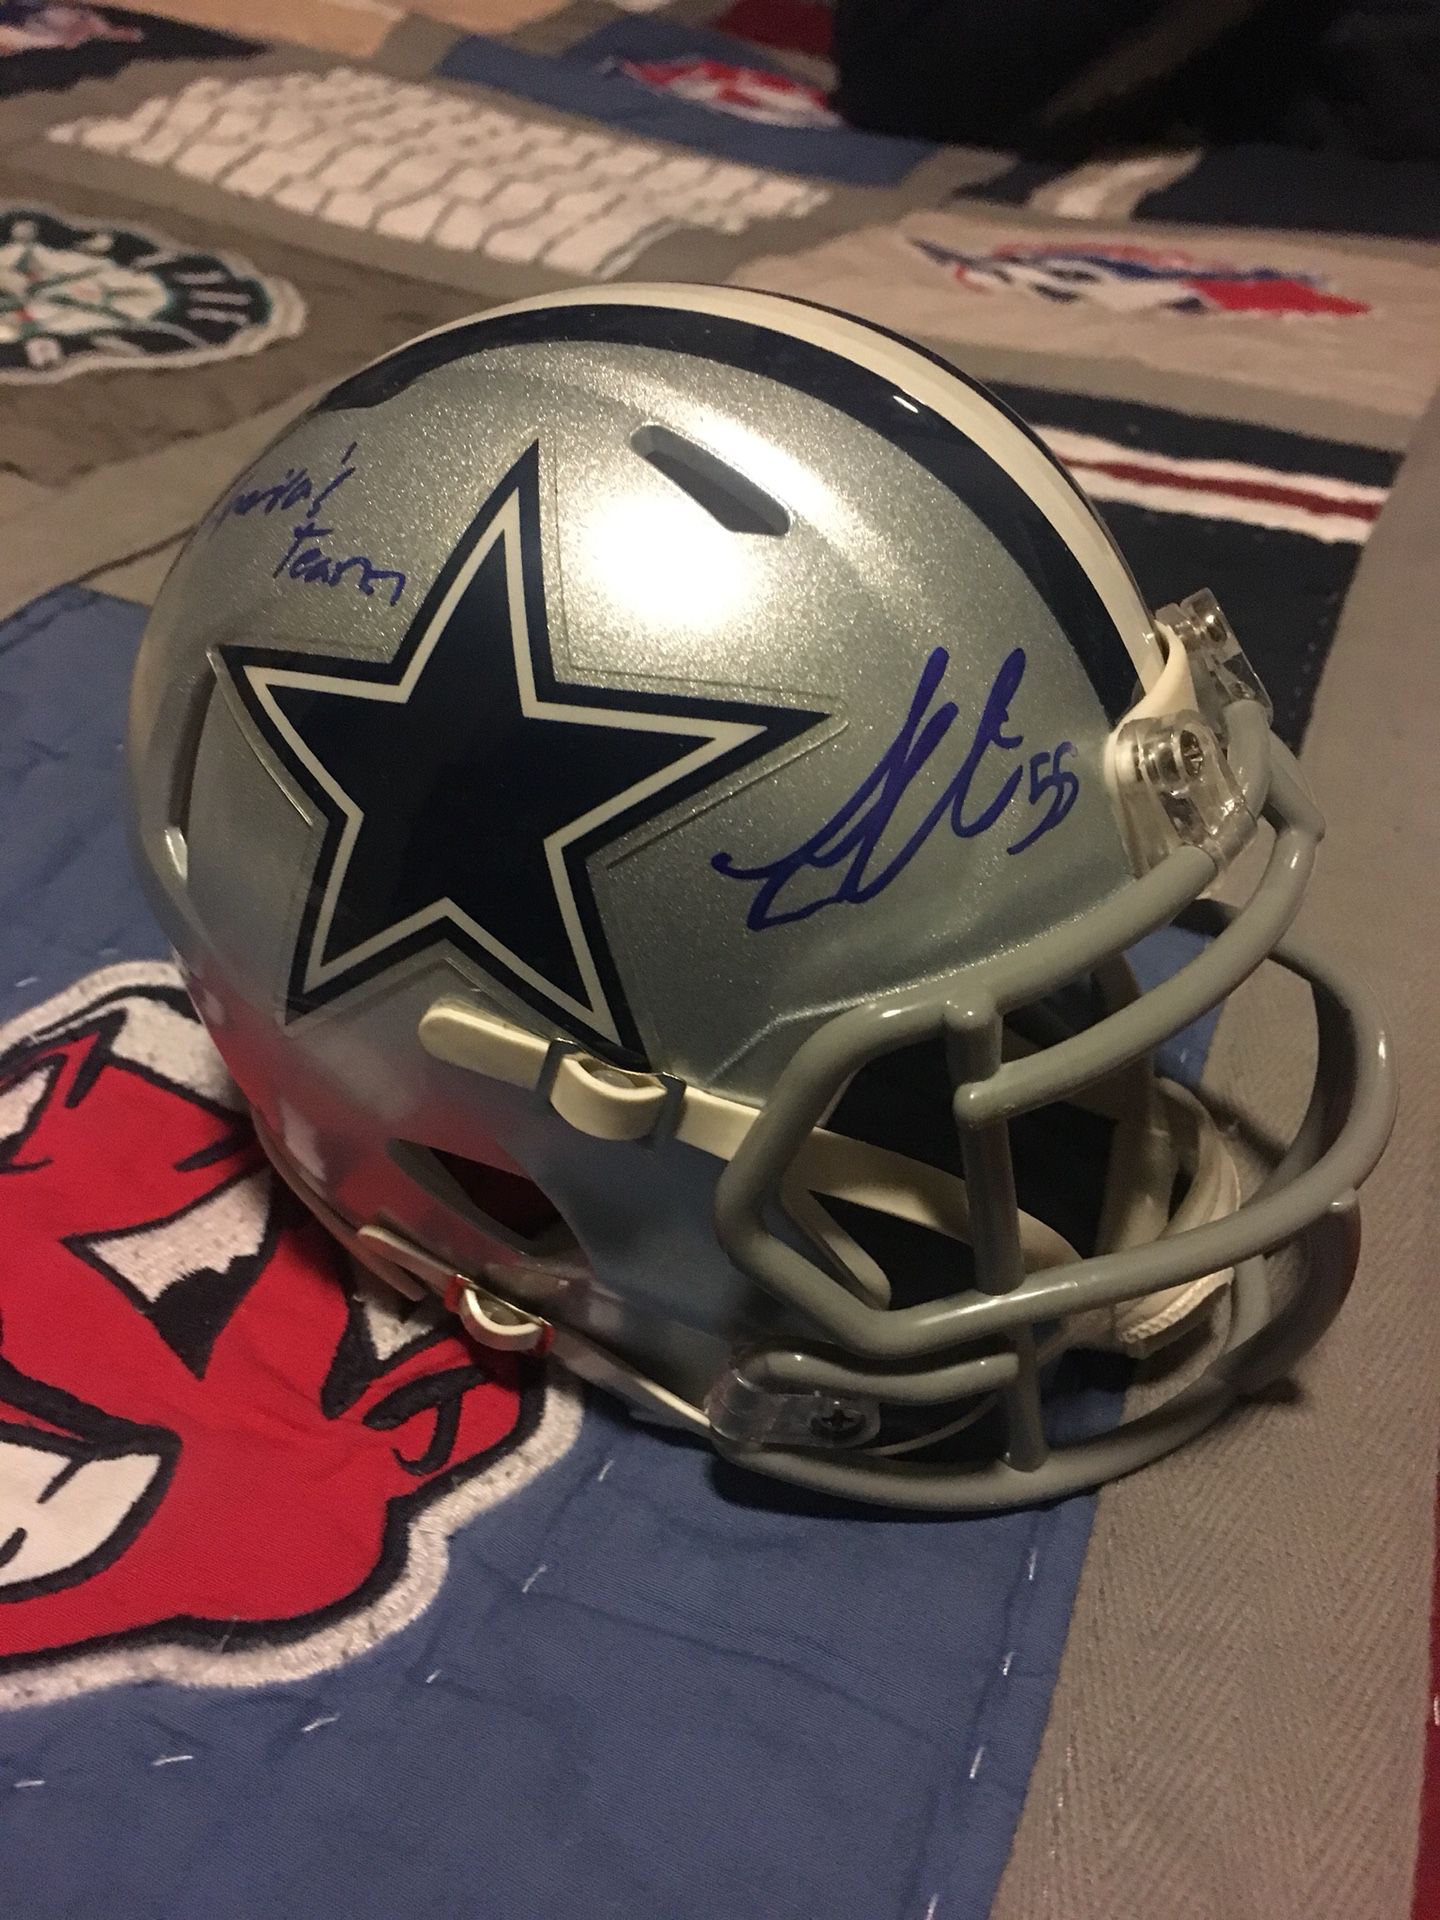 Leighton Vander Esch Signed Mini Helmet - Dallas Cowboys